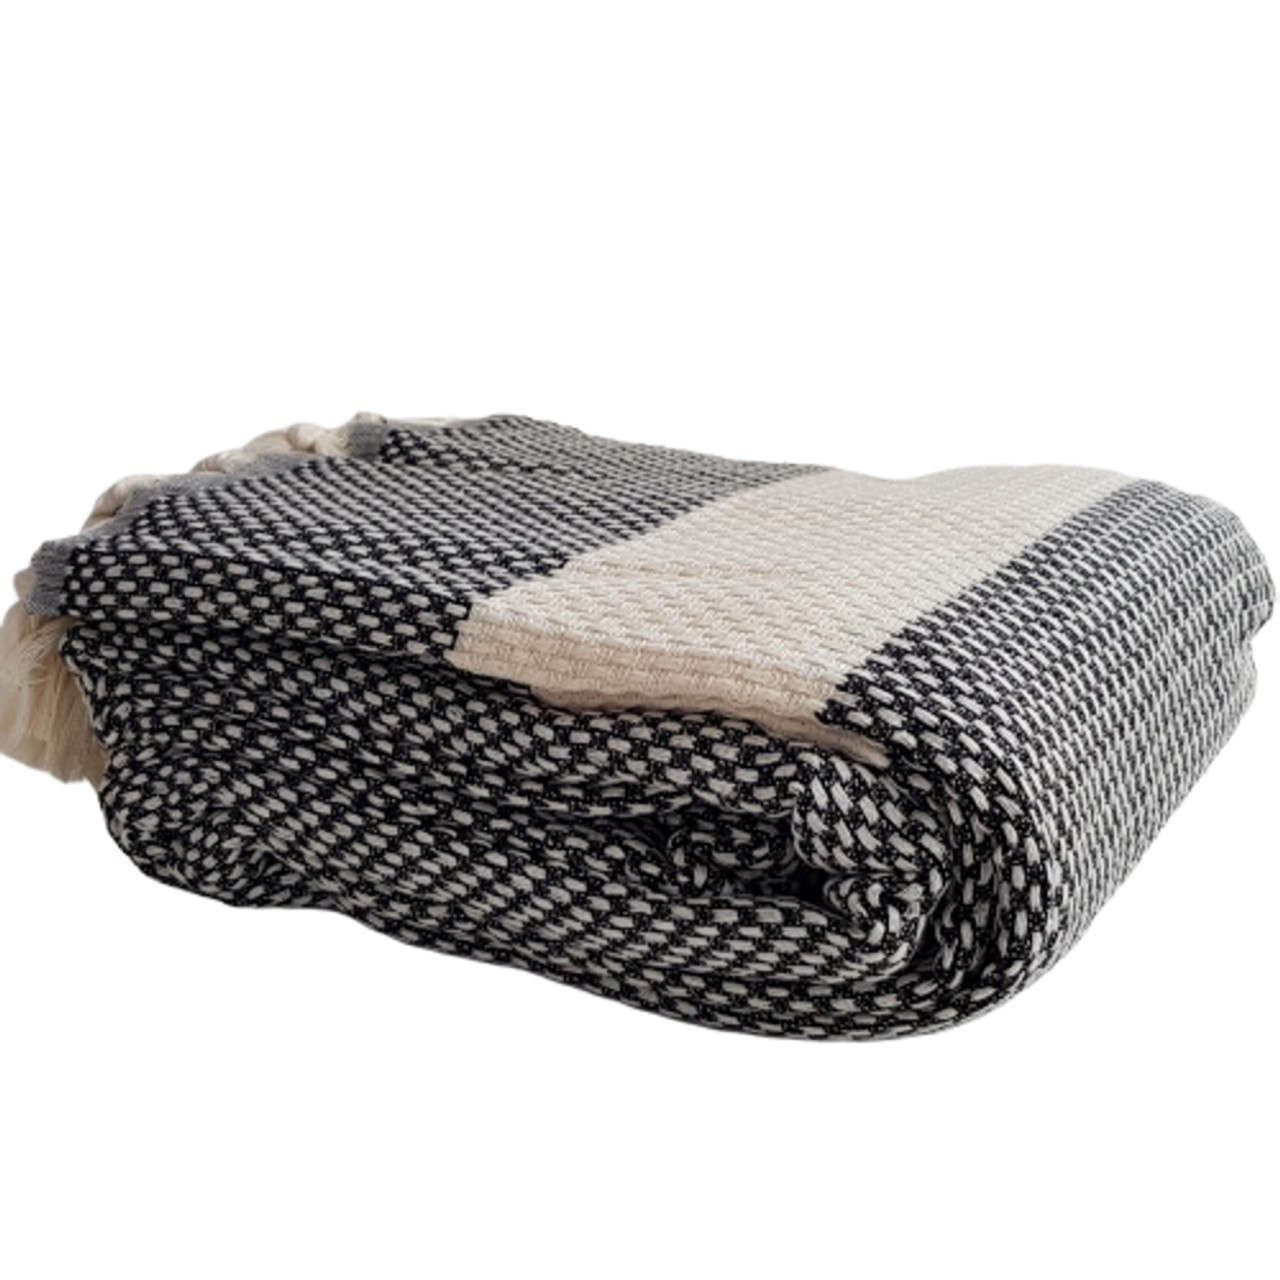 Basket Weave Large Cotton Throw Blanket Bedspread 200x240 Cm